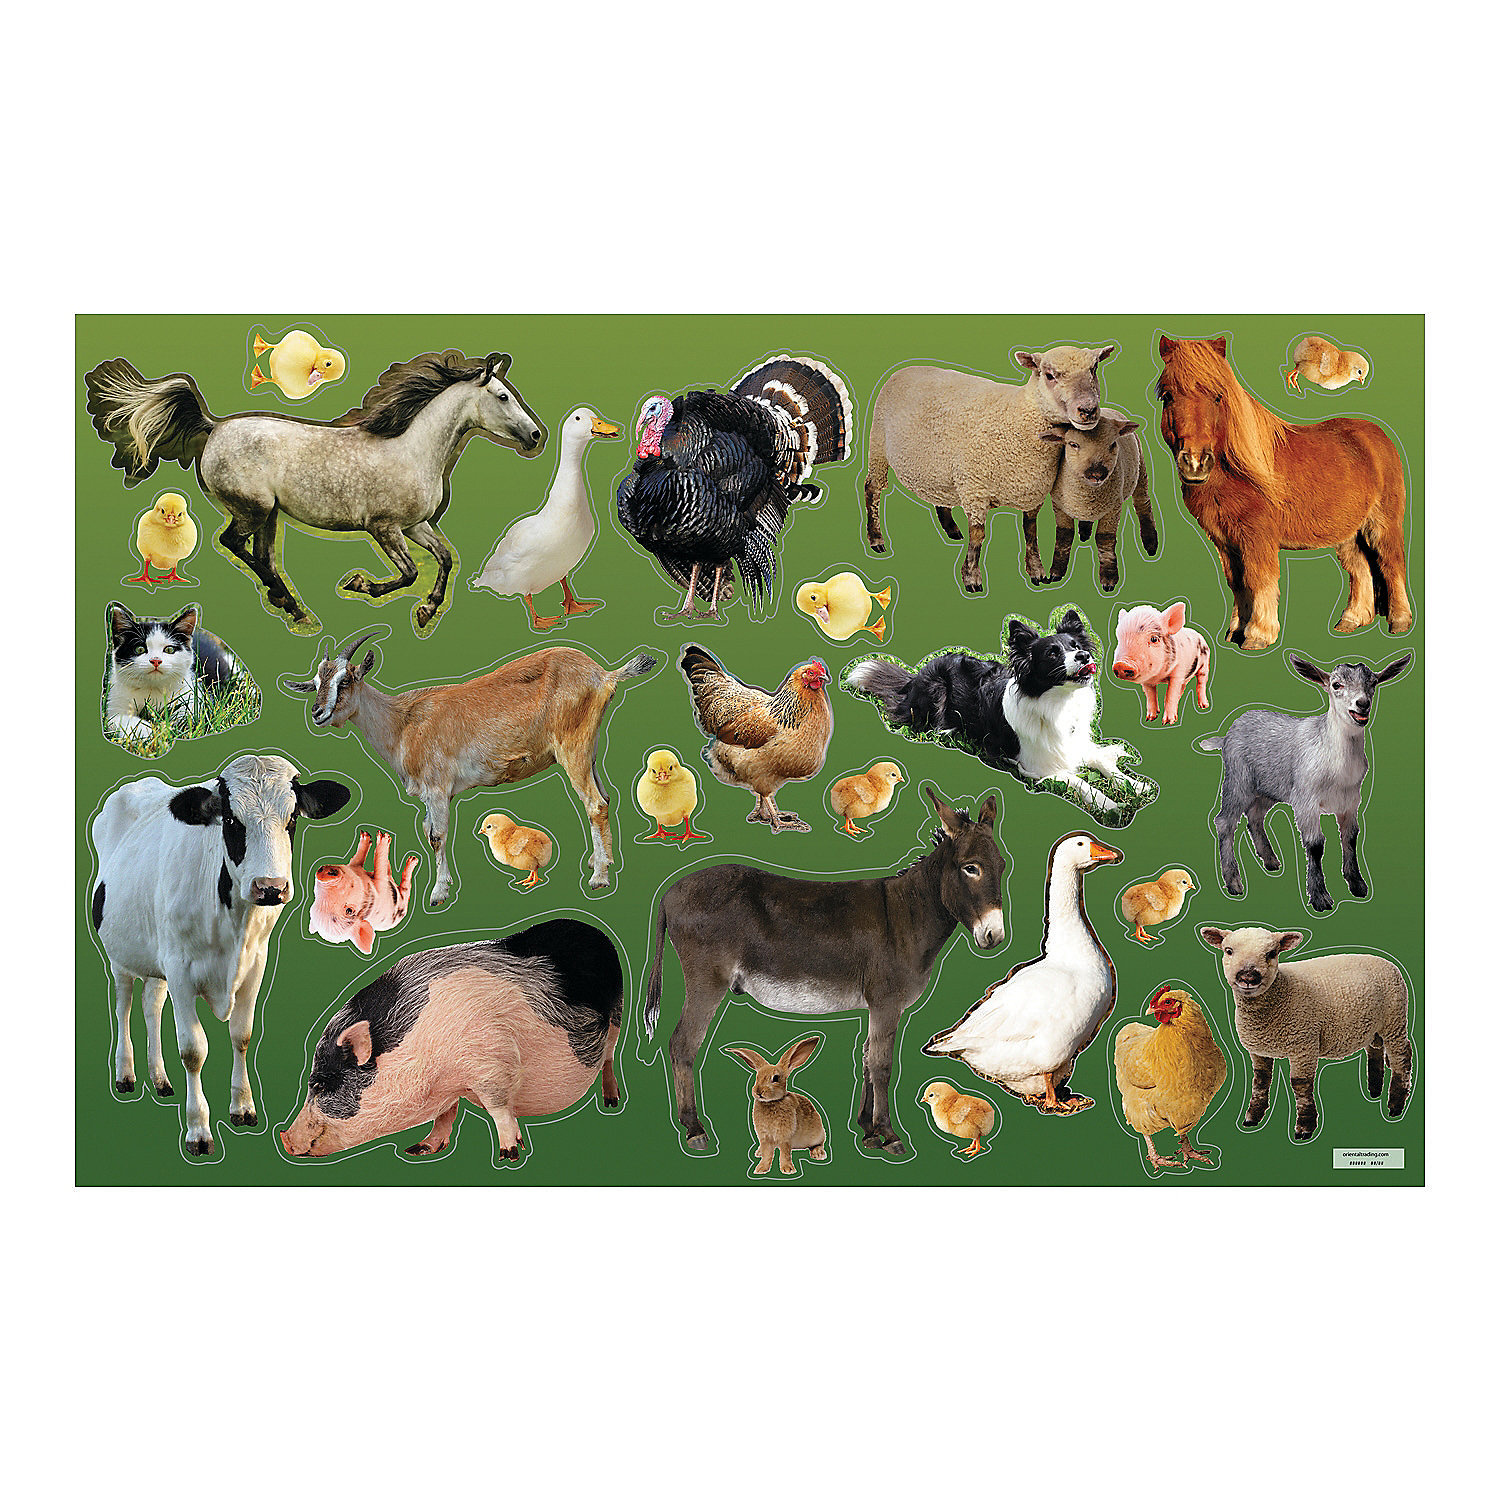 Giant Realistic Farm Animal Sticker Scenes1500 x 1500